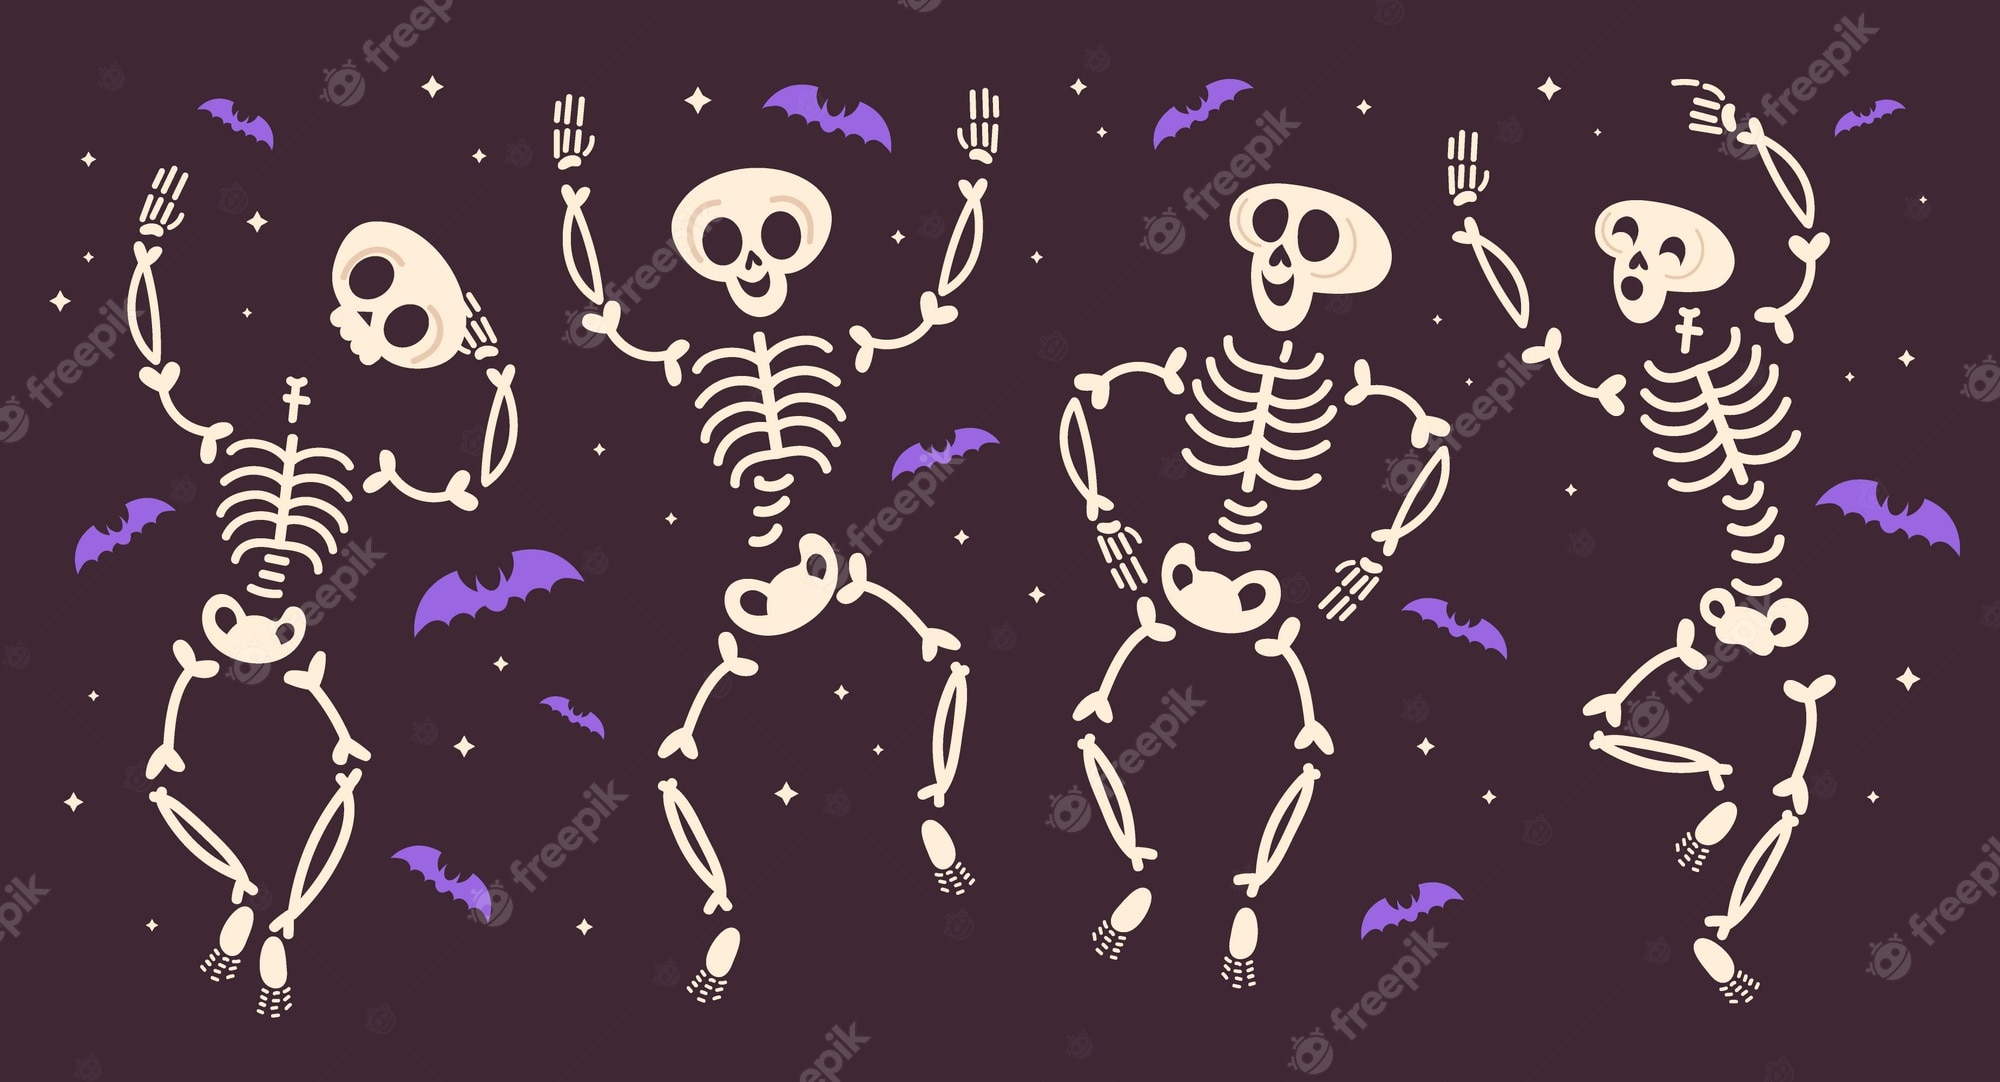 Spooky skeleton vectors illustrations for free download